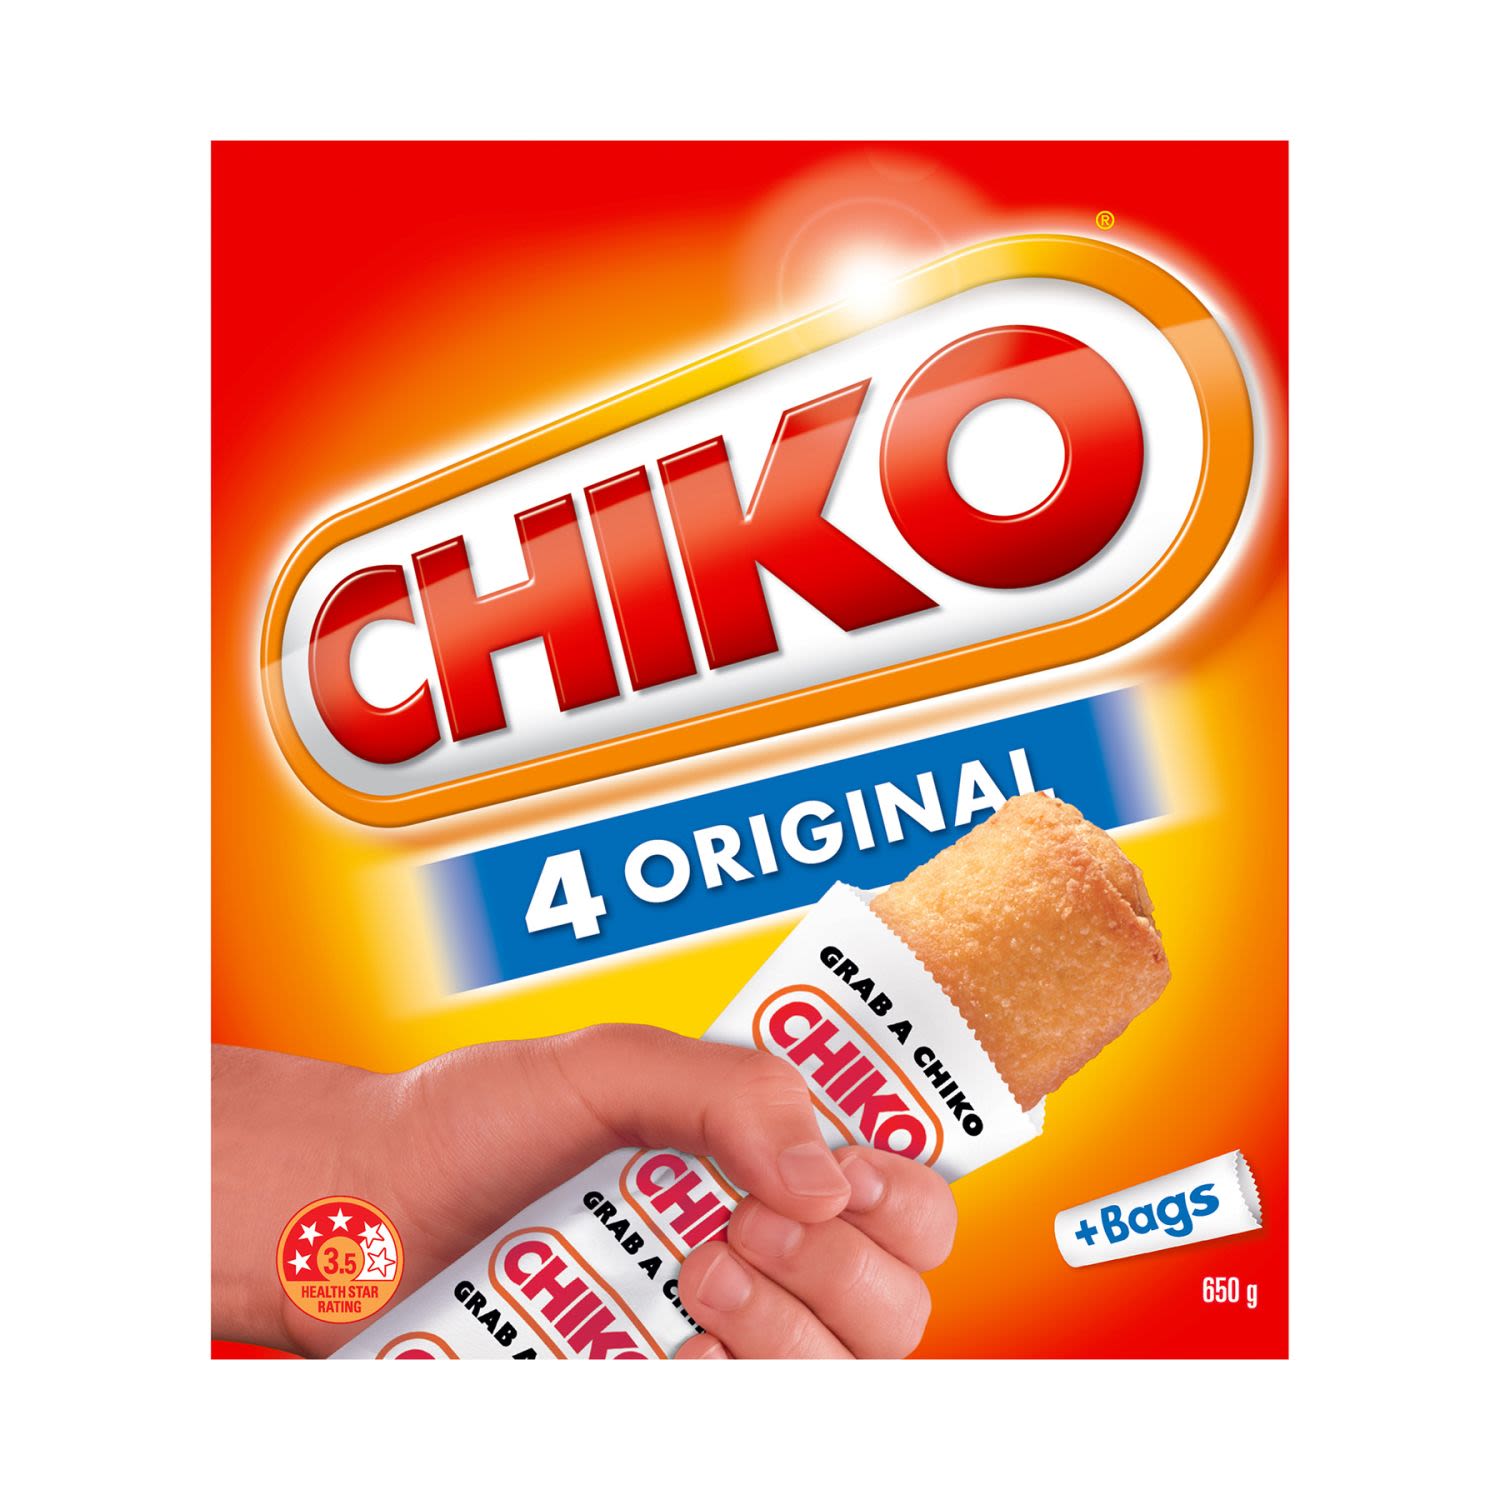 Chiko Original Rolls, 4 Each